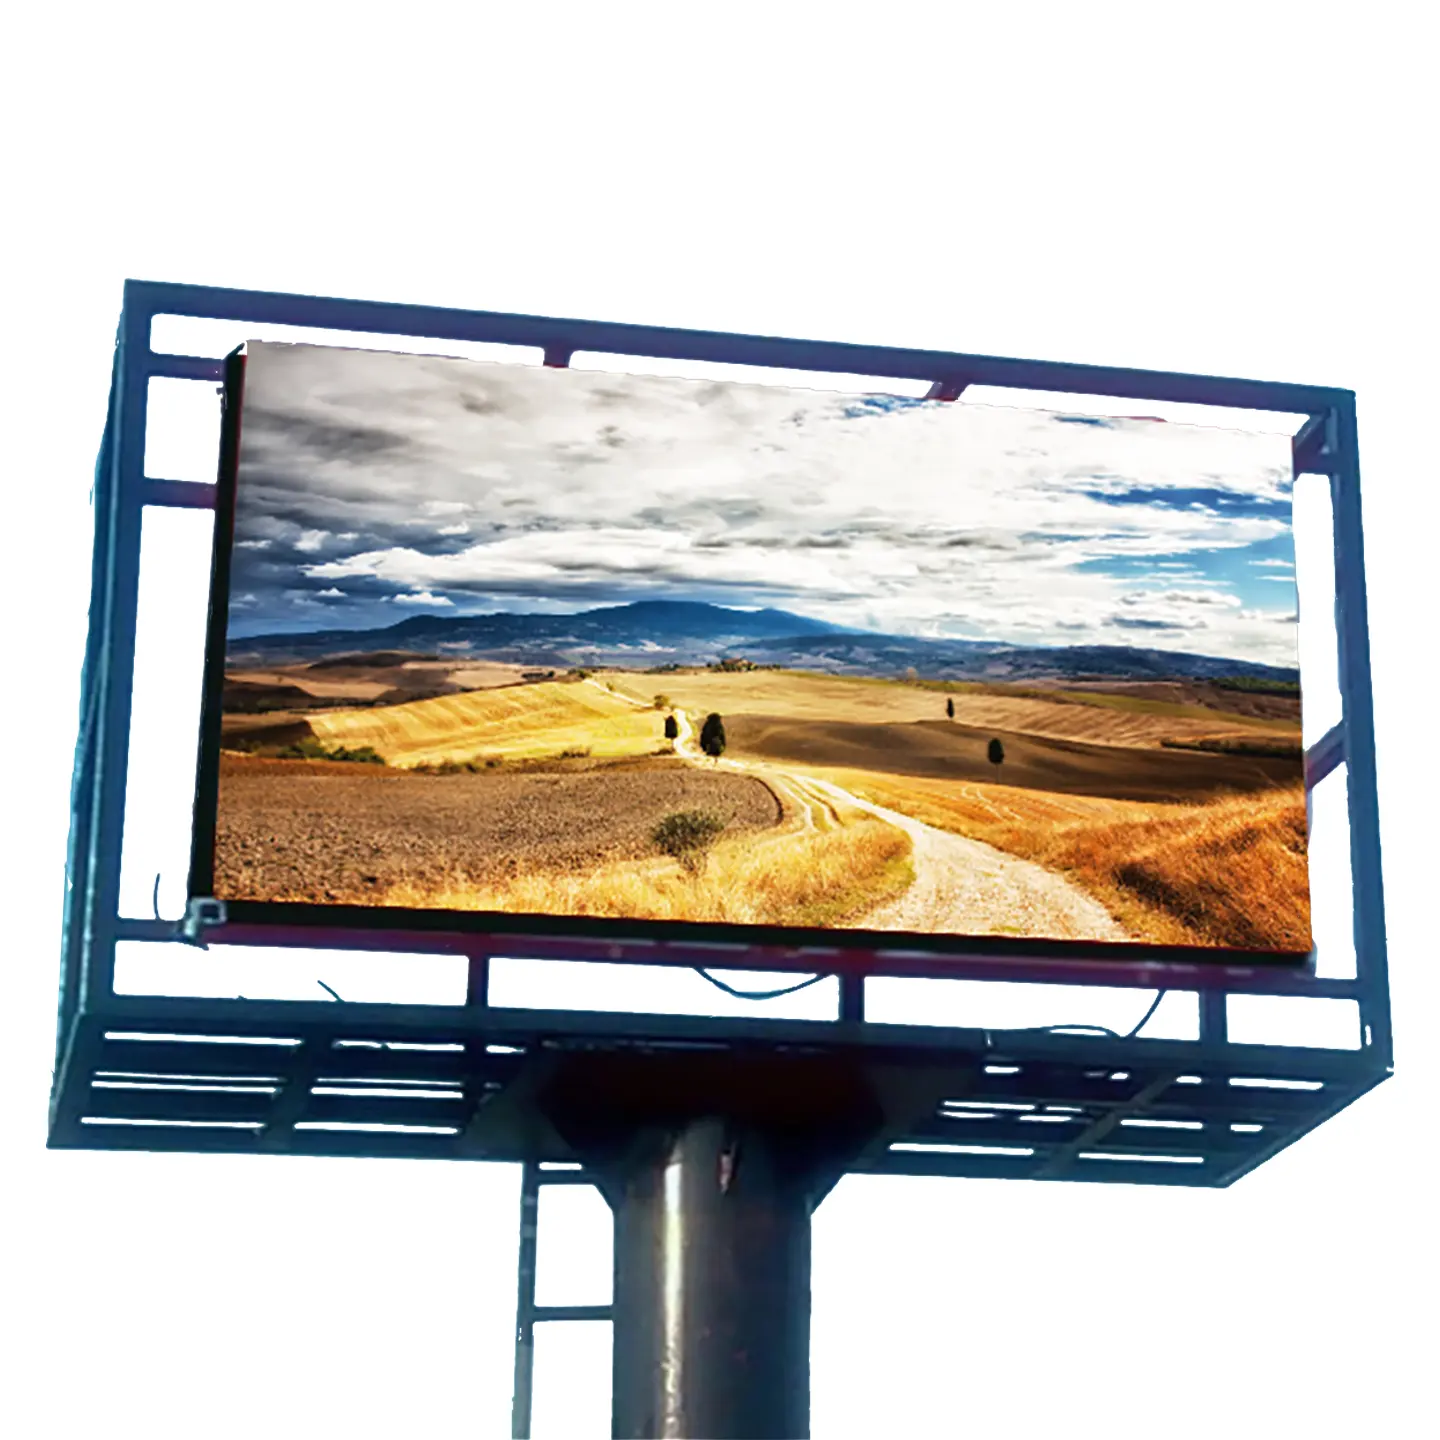 LEDスクリーン屋外防水サイネージ両面10X4フィートビデオシステム完全広告商用ディスプレイP6